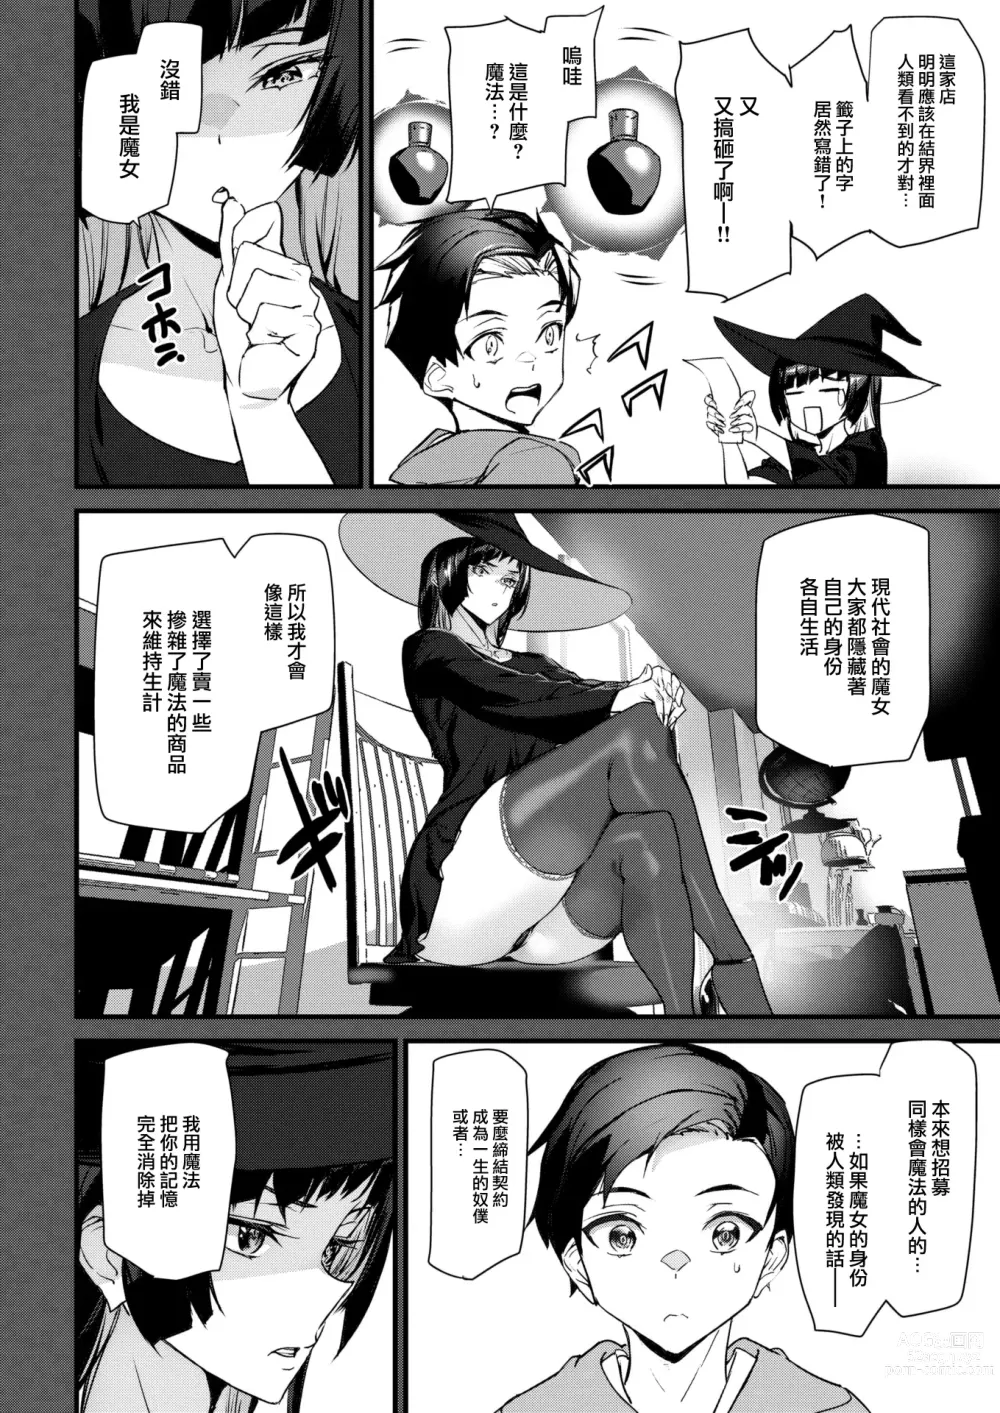 Page 9 of manga Boobie Witch